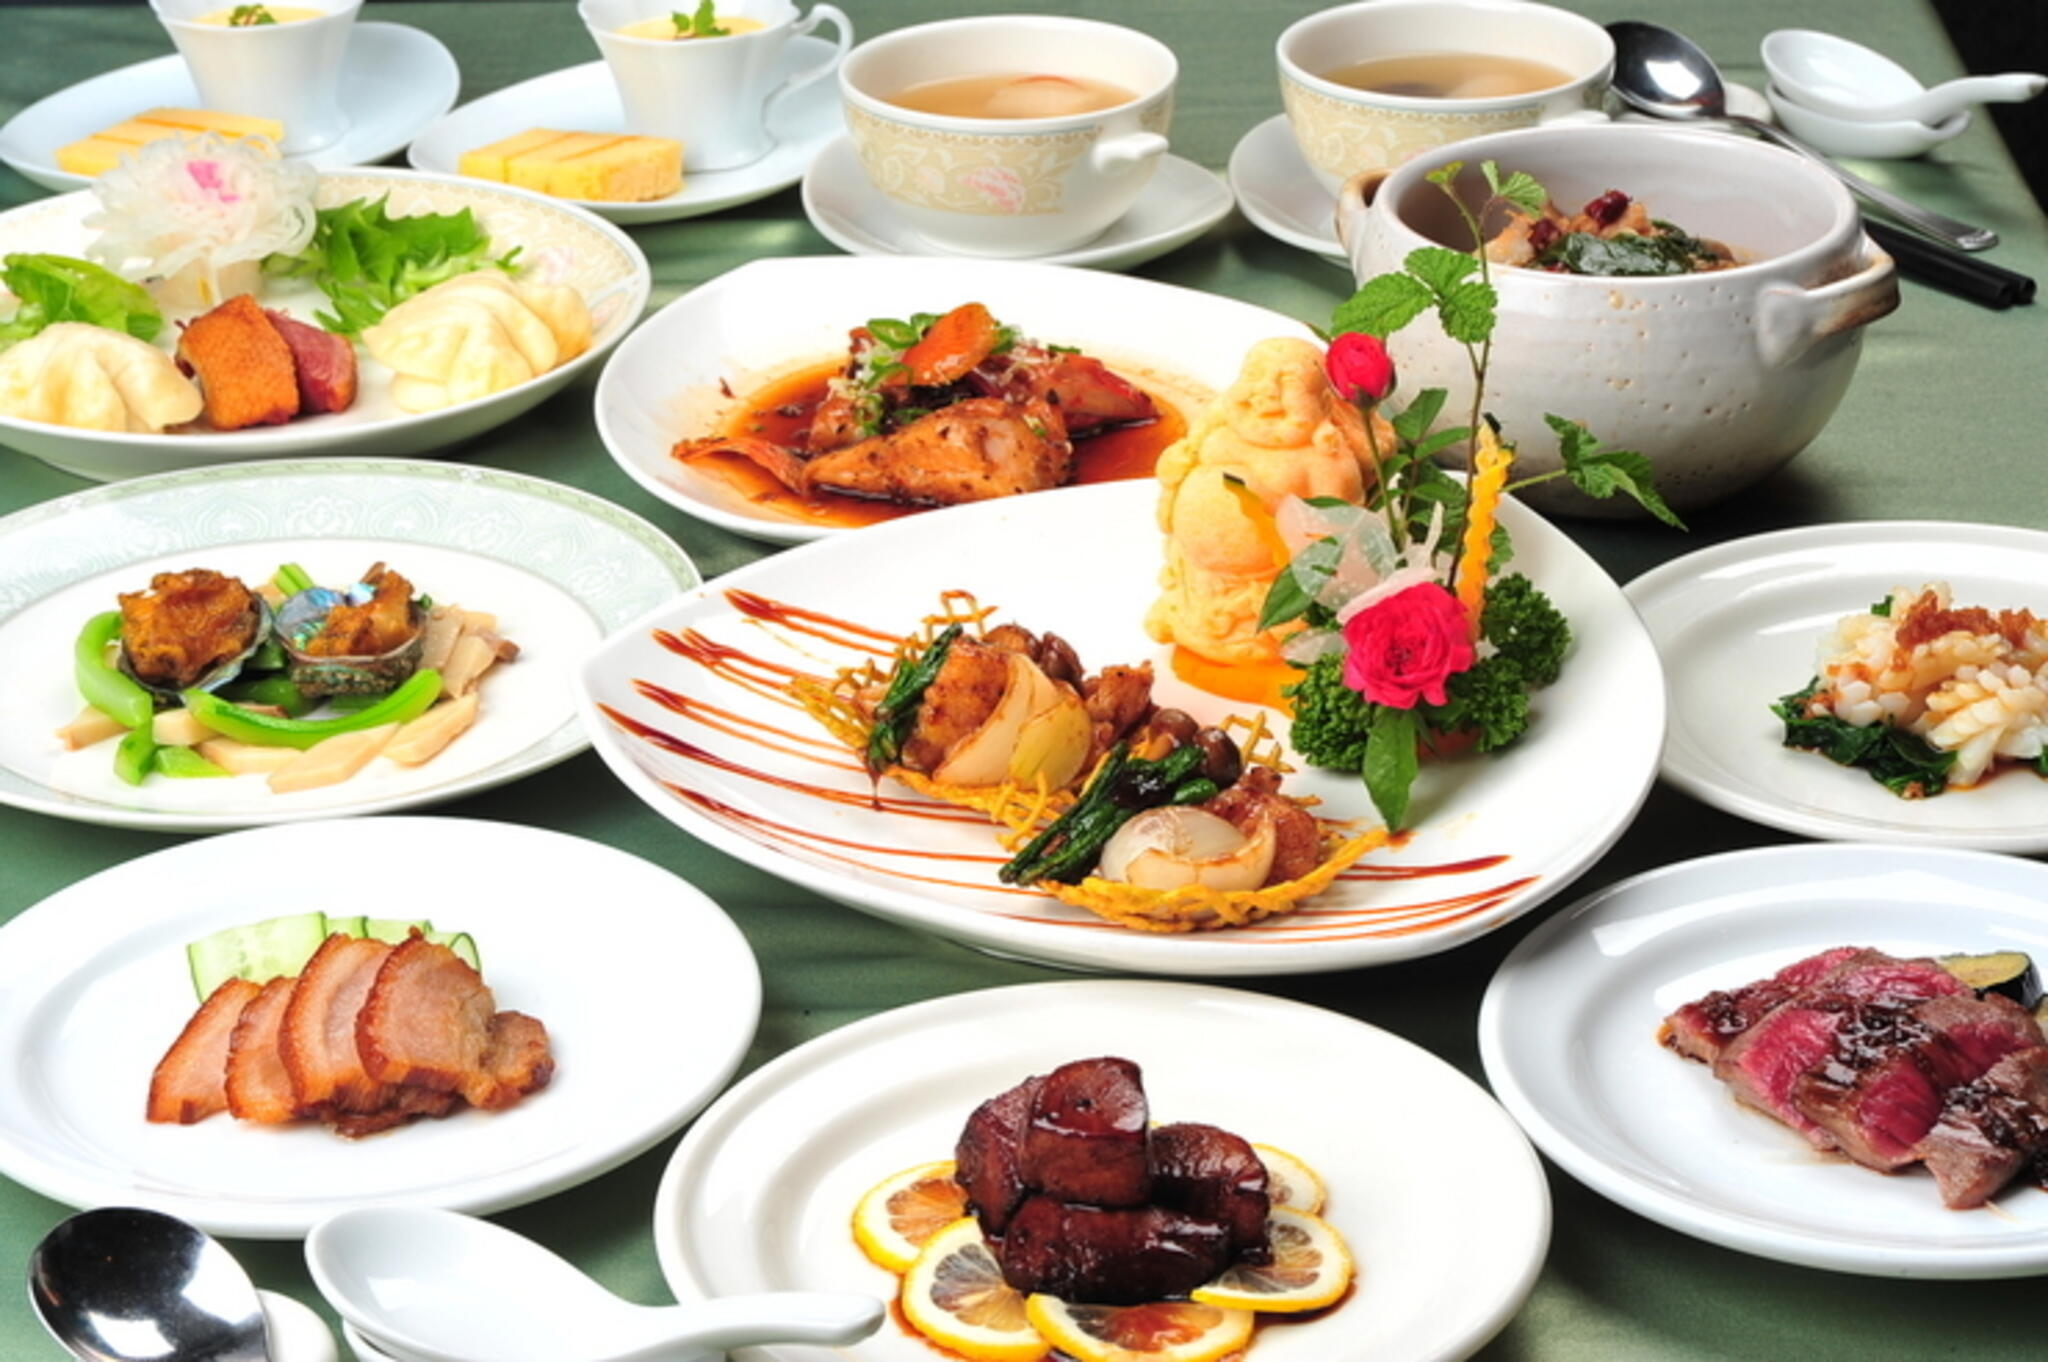 中国菜館 竹琳の代表写真1